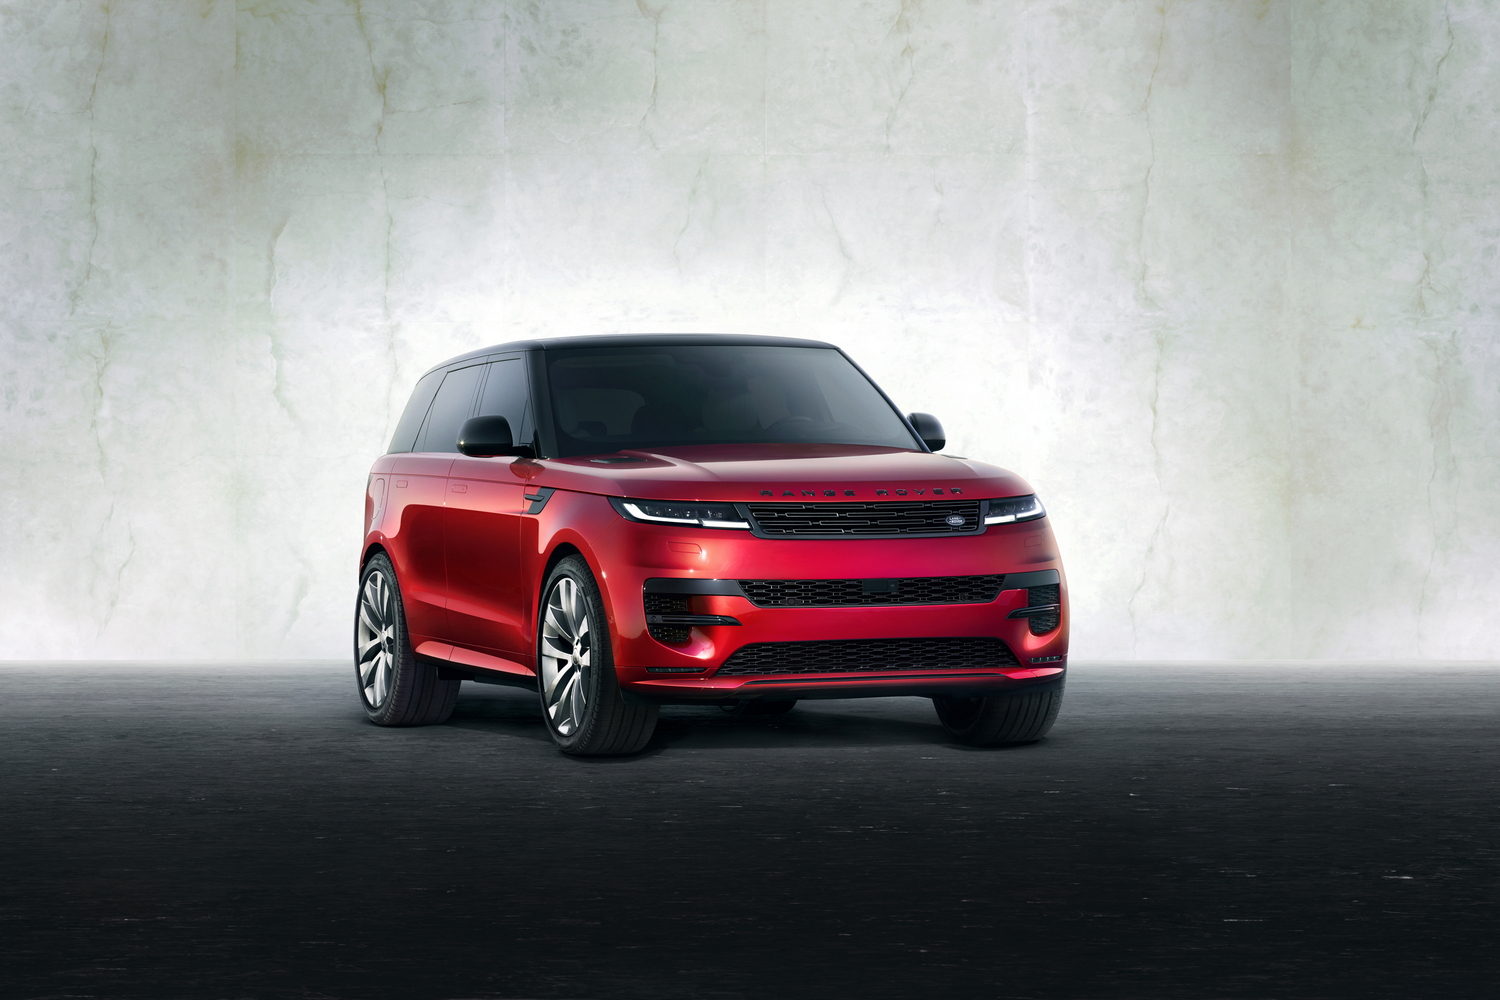 New Range Rover Sport unveiled